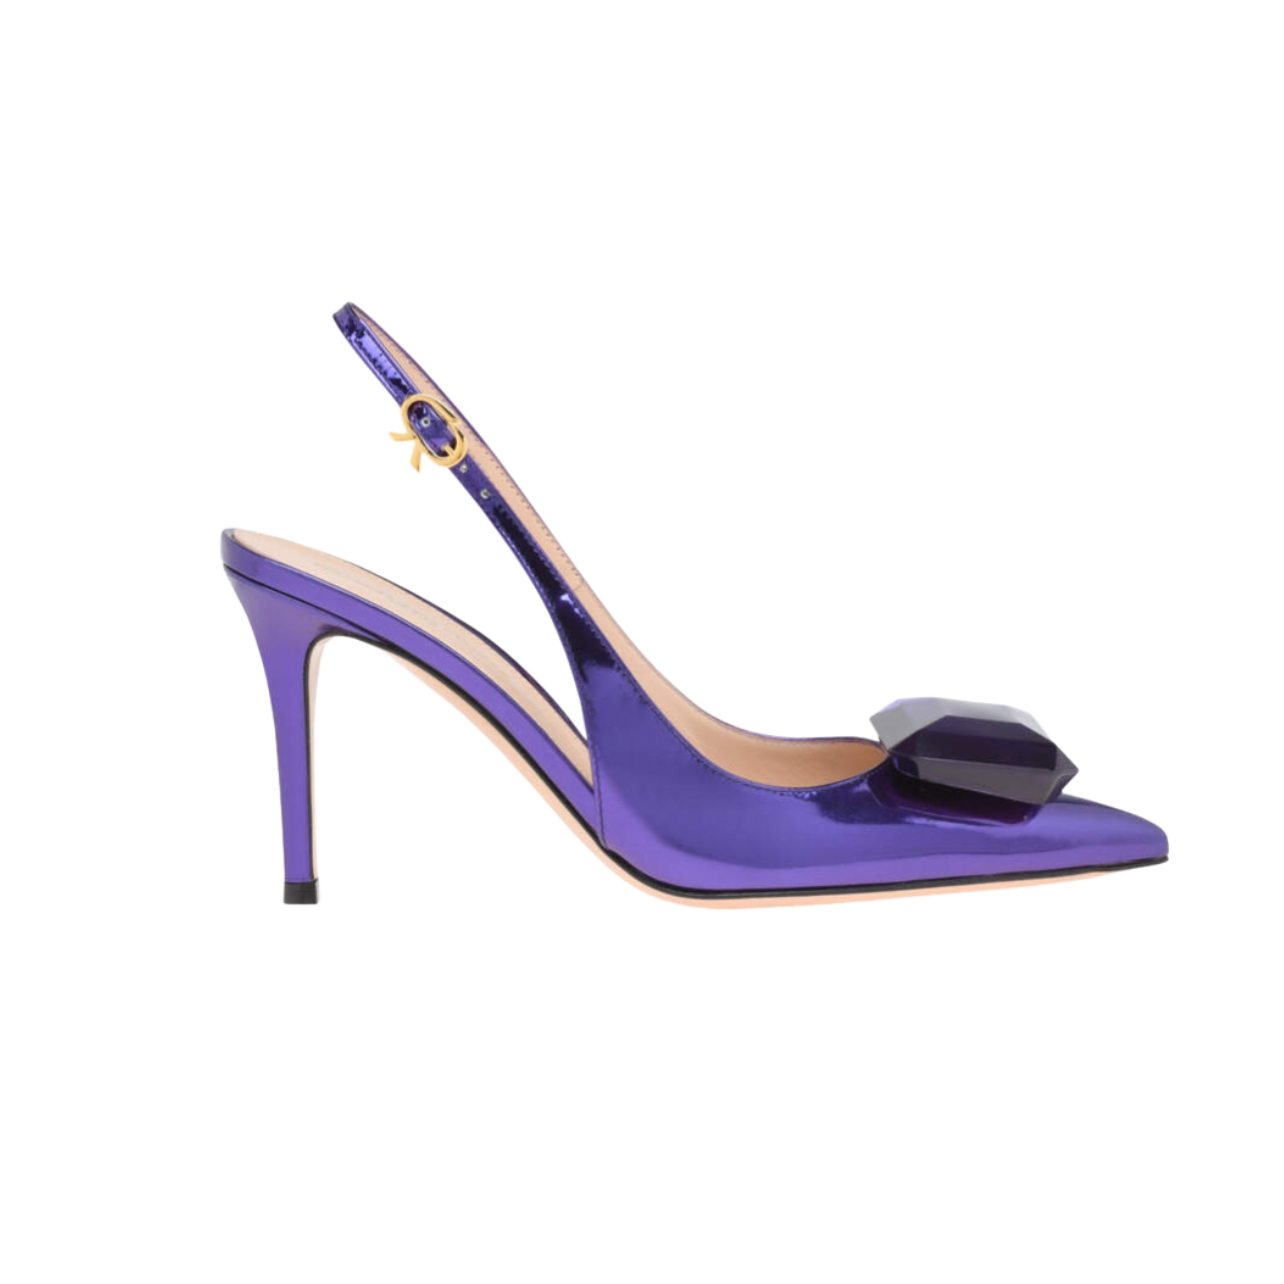 Purple slingback pointed-toe heel with oversized front gem embellishment